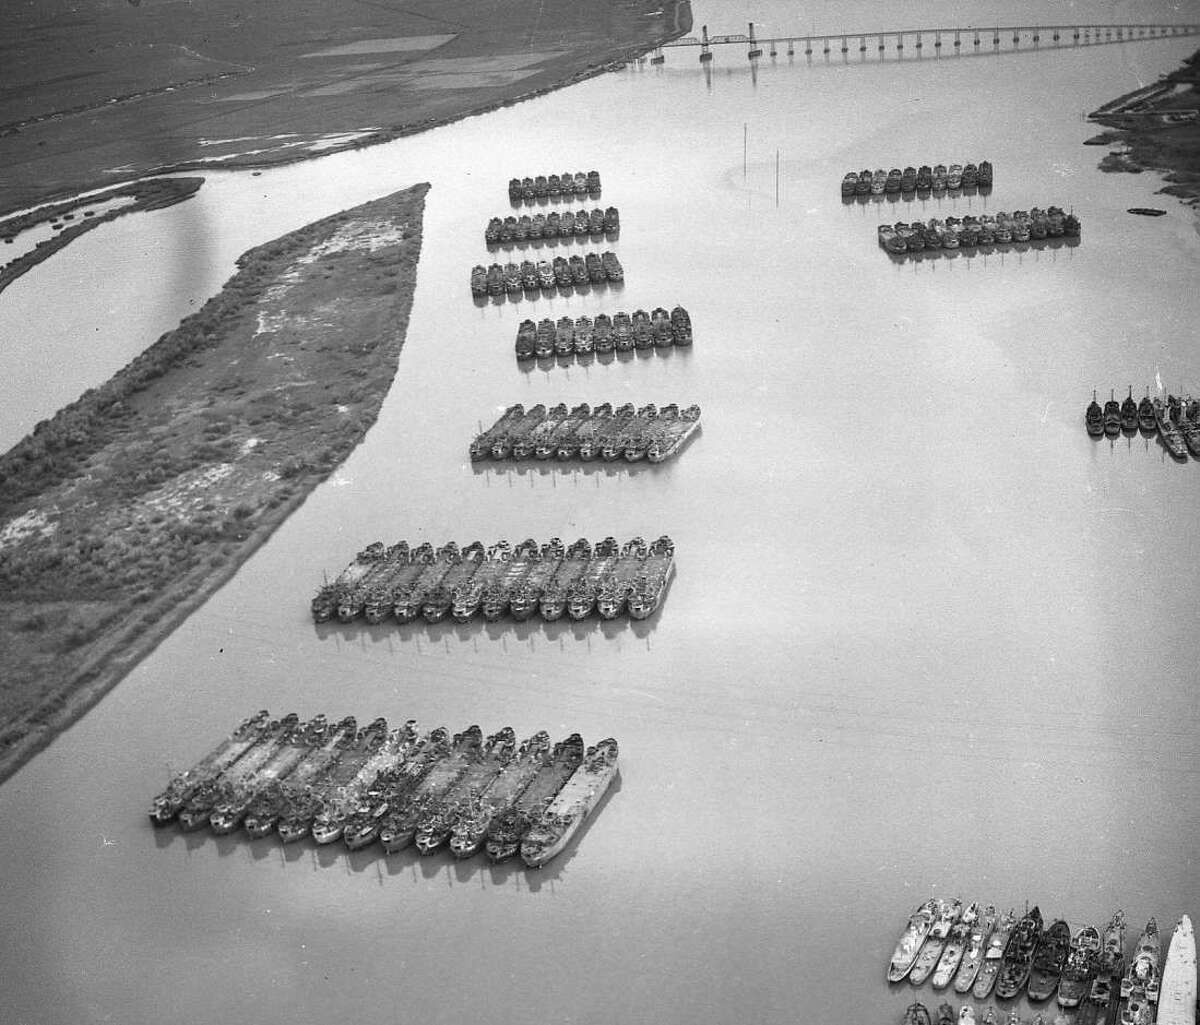 United States Navy Reserve Fleet in Suisun Bay, March 26, 1947.